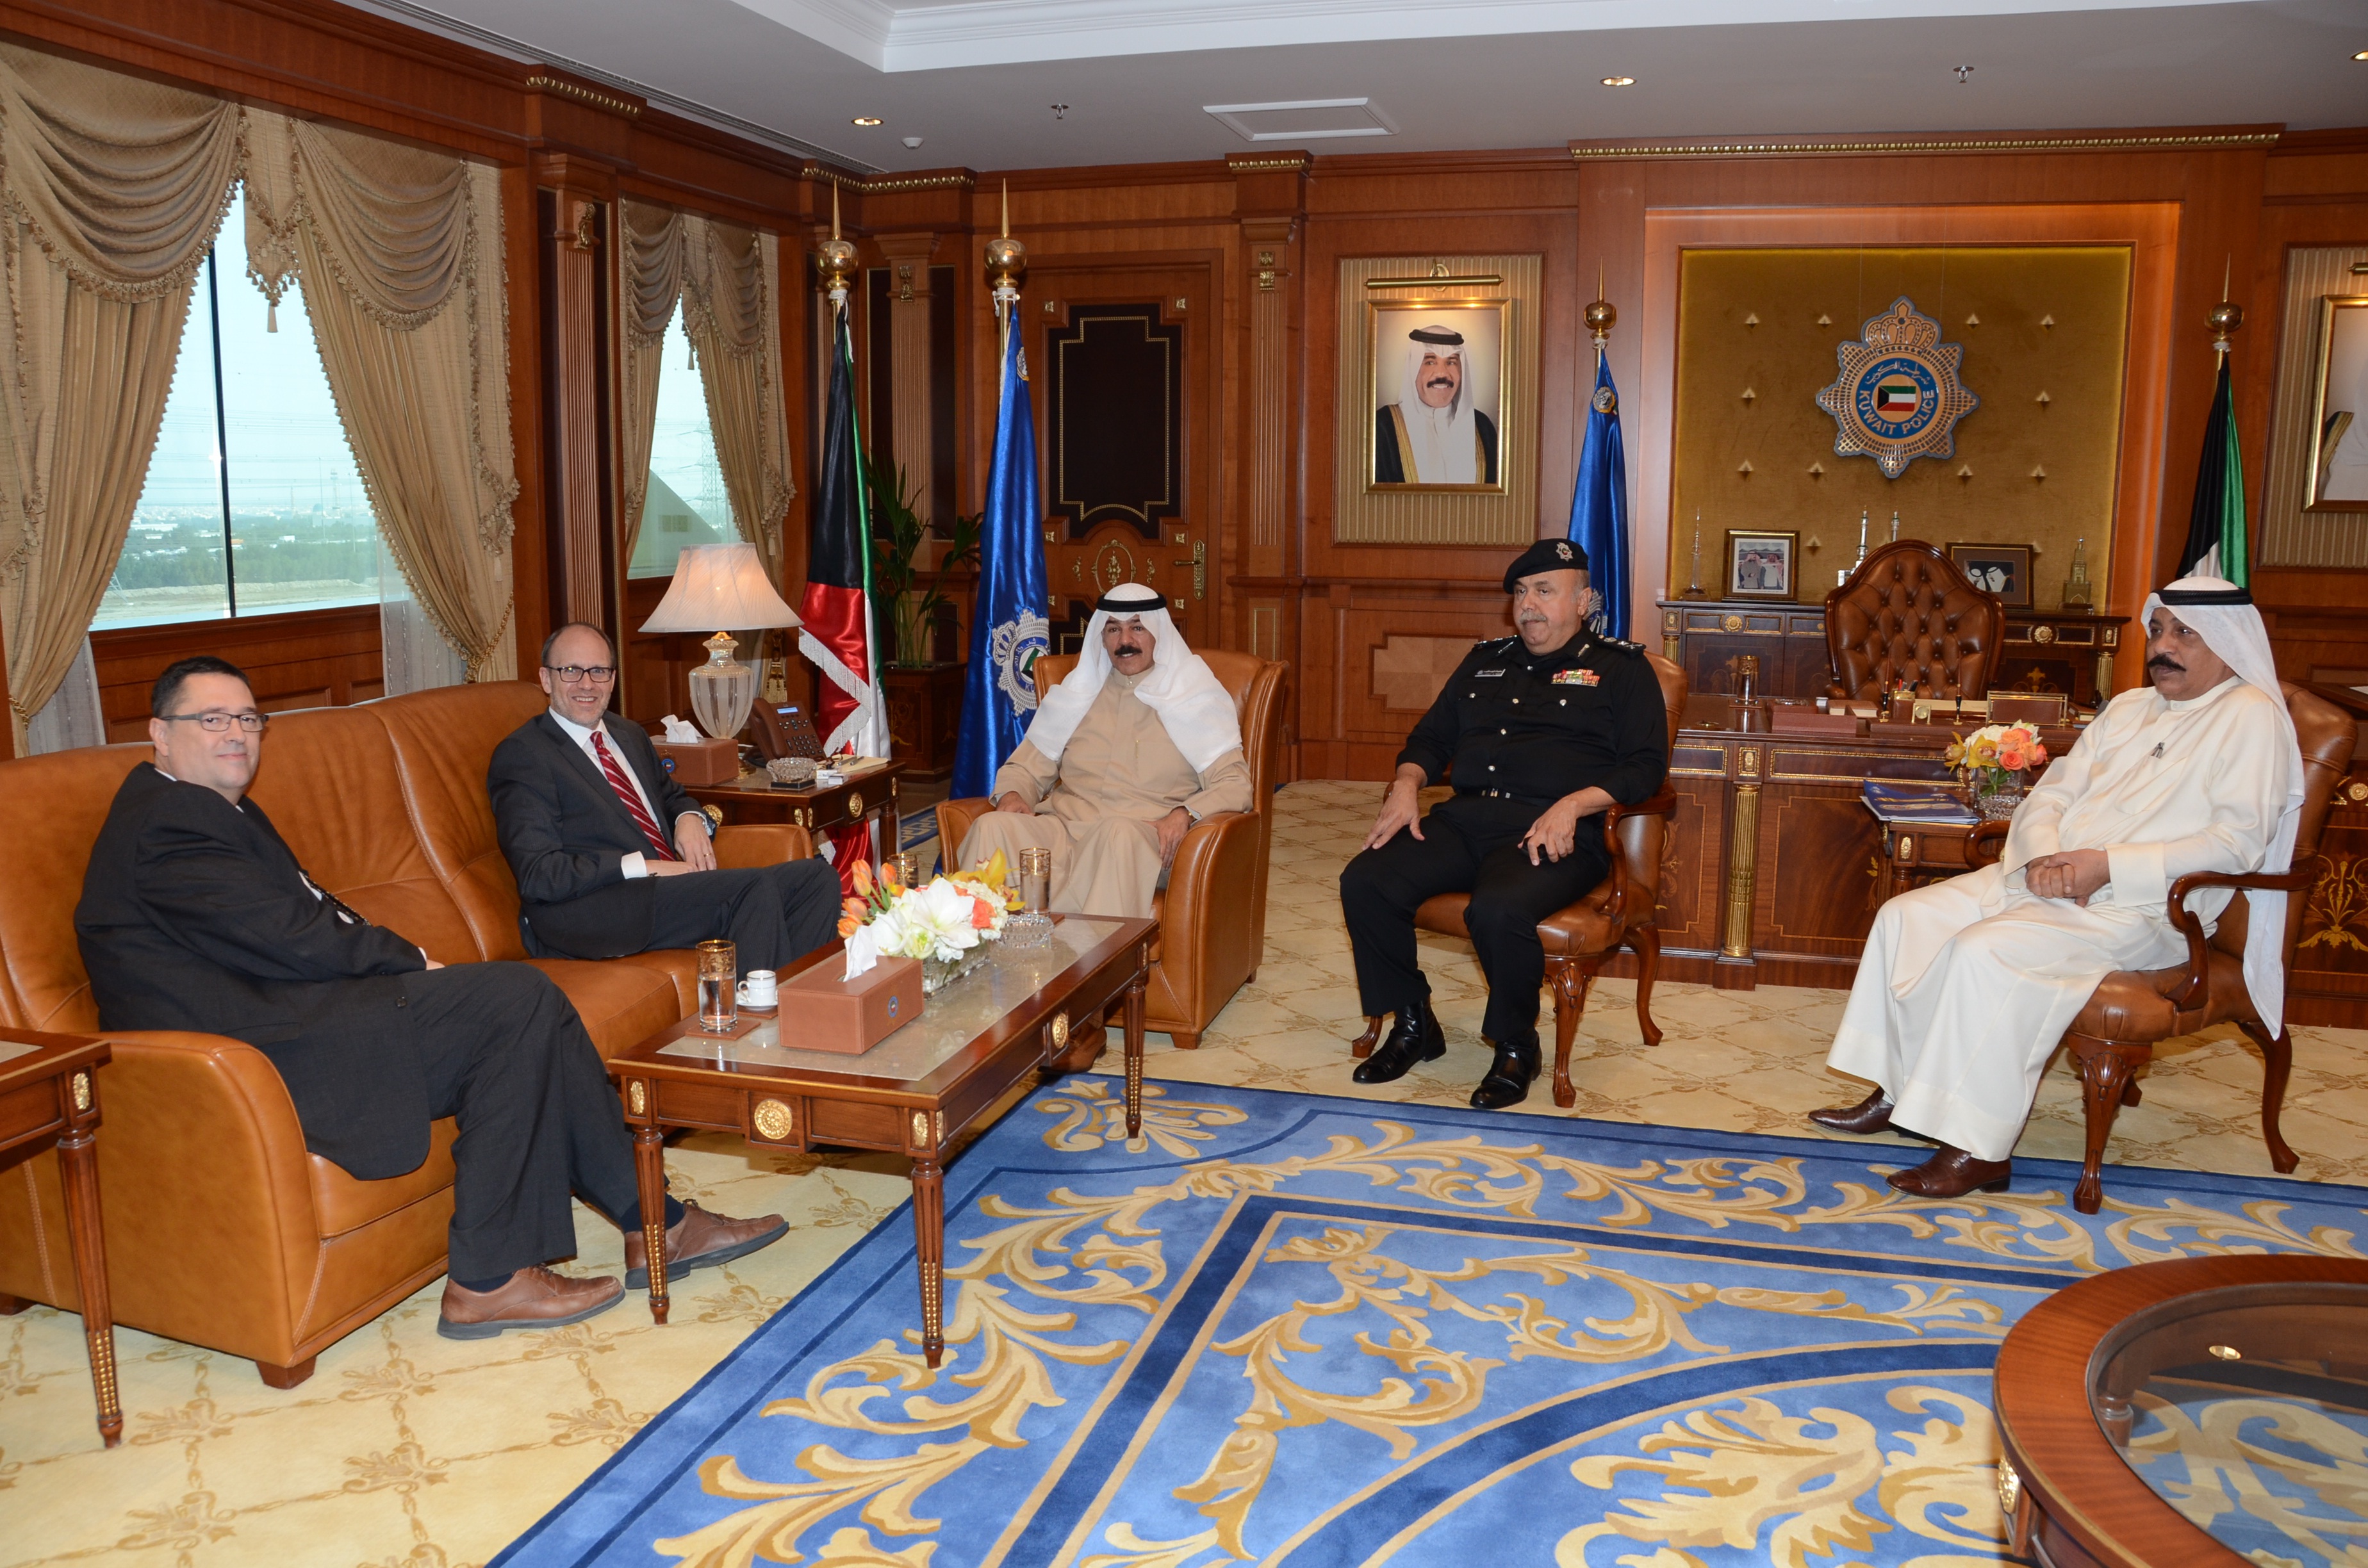 Kuwait's Deputy Prime Minister and Interior Minister Sheikh Mohammad Al-Khaled Al-Hamad Al-Sabah and US ambassador in Kuwait Douglas Silliman